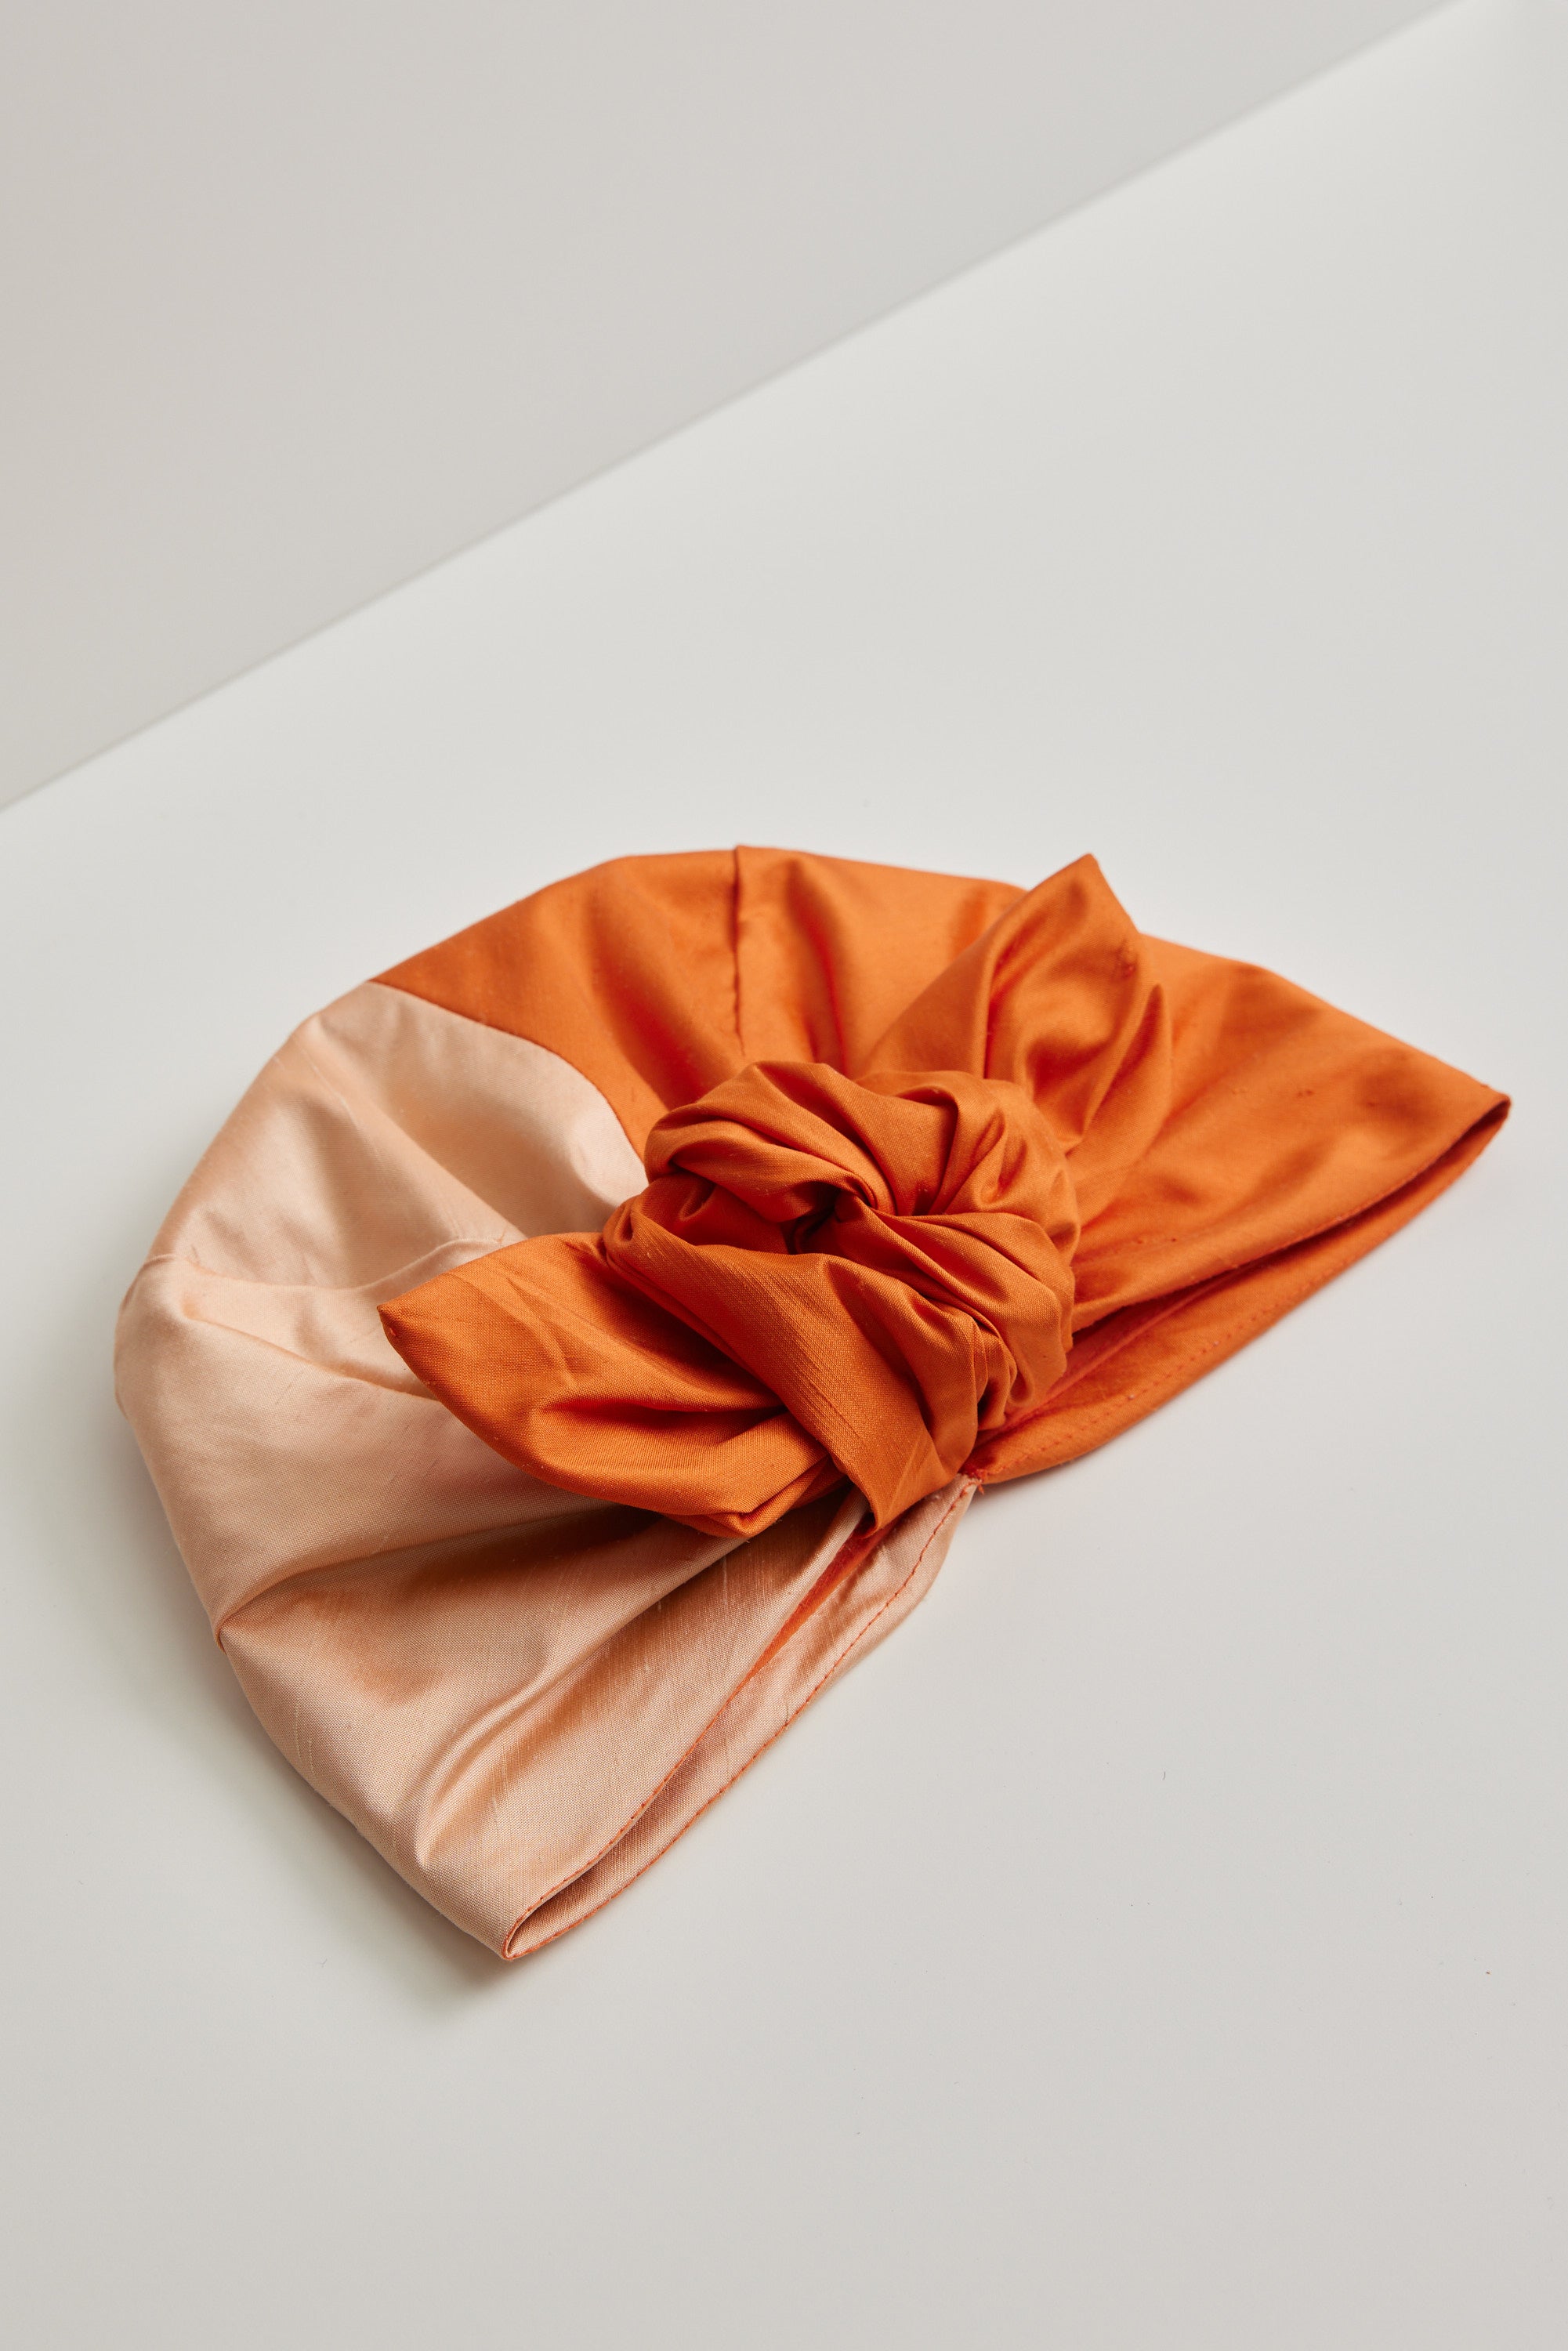 Parelli knotted turban hat - Orange shantung silk